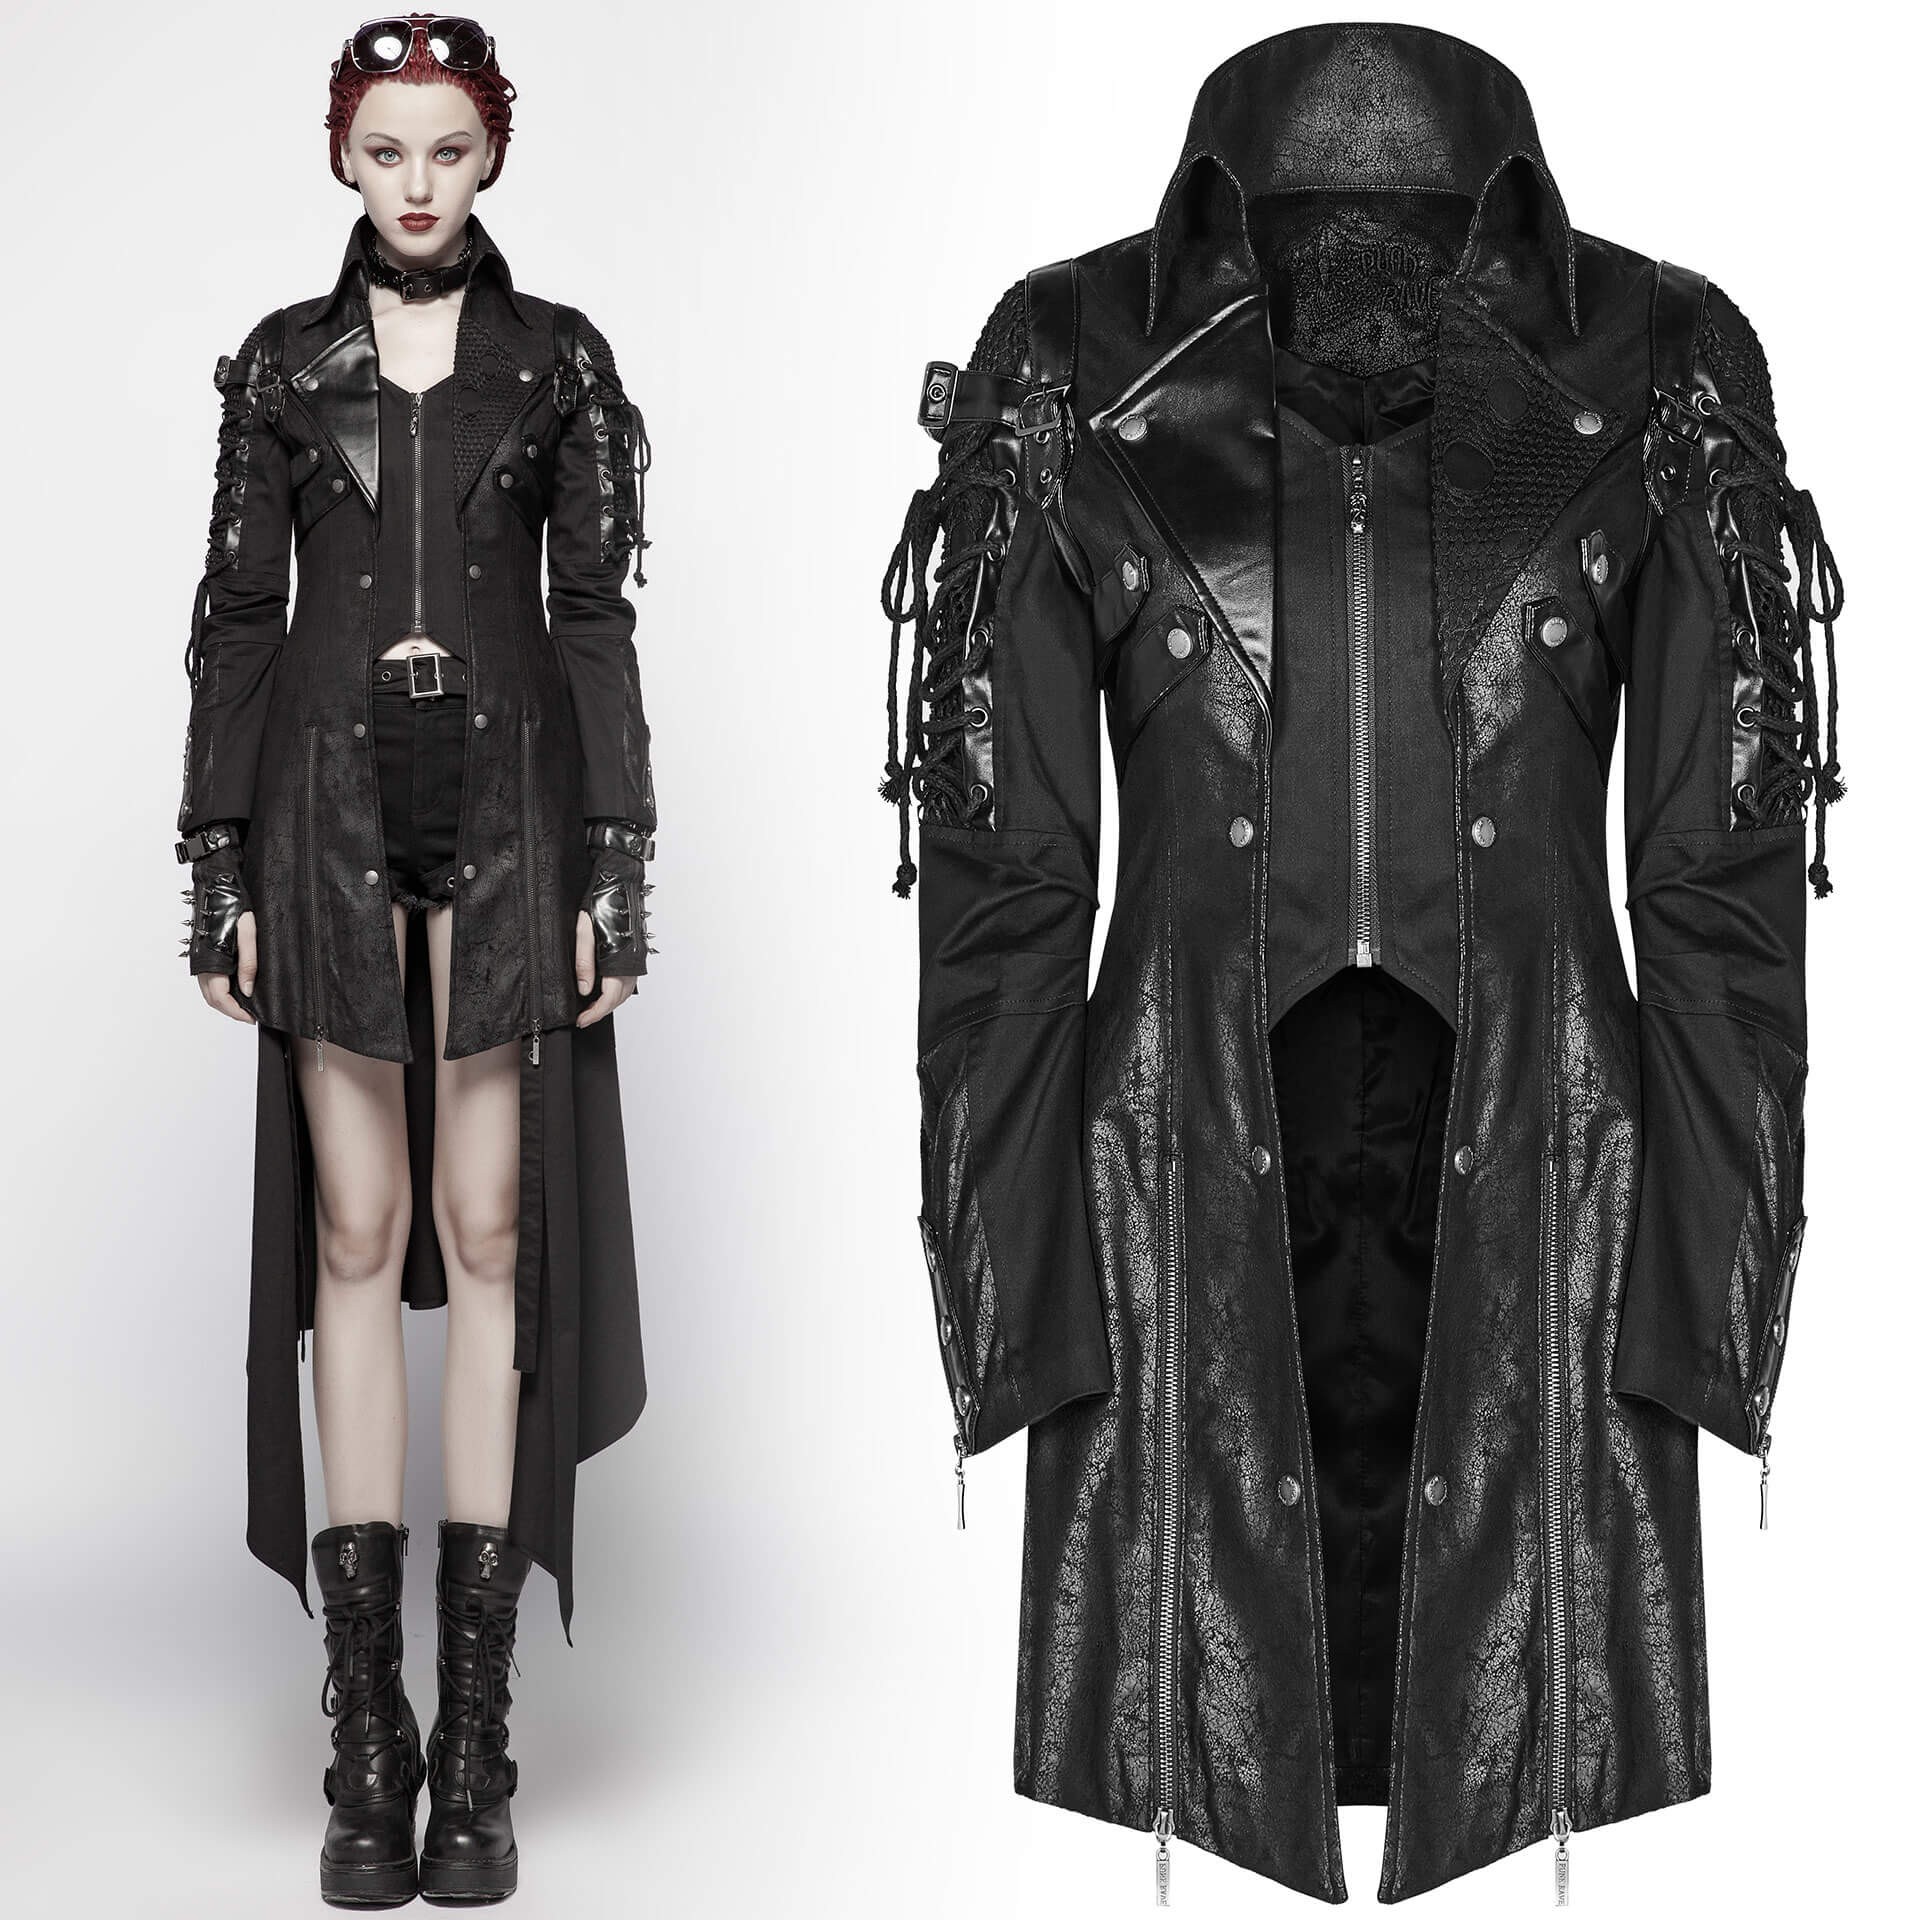 https://www.e-gothiczone.com/43783/poisonblack-gothic-style-women-s-jacket-by-punk-rave.jpg